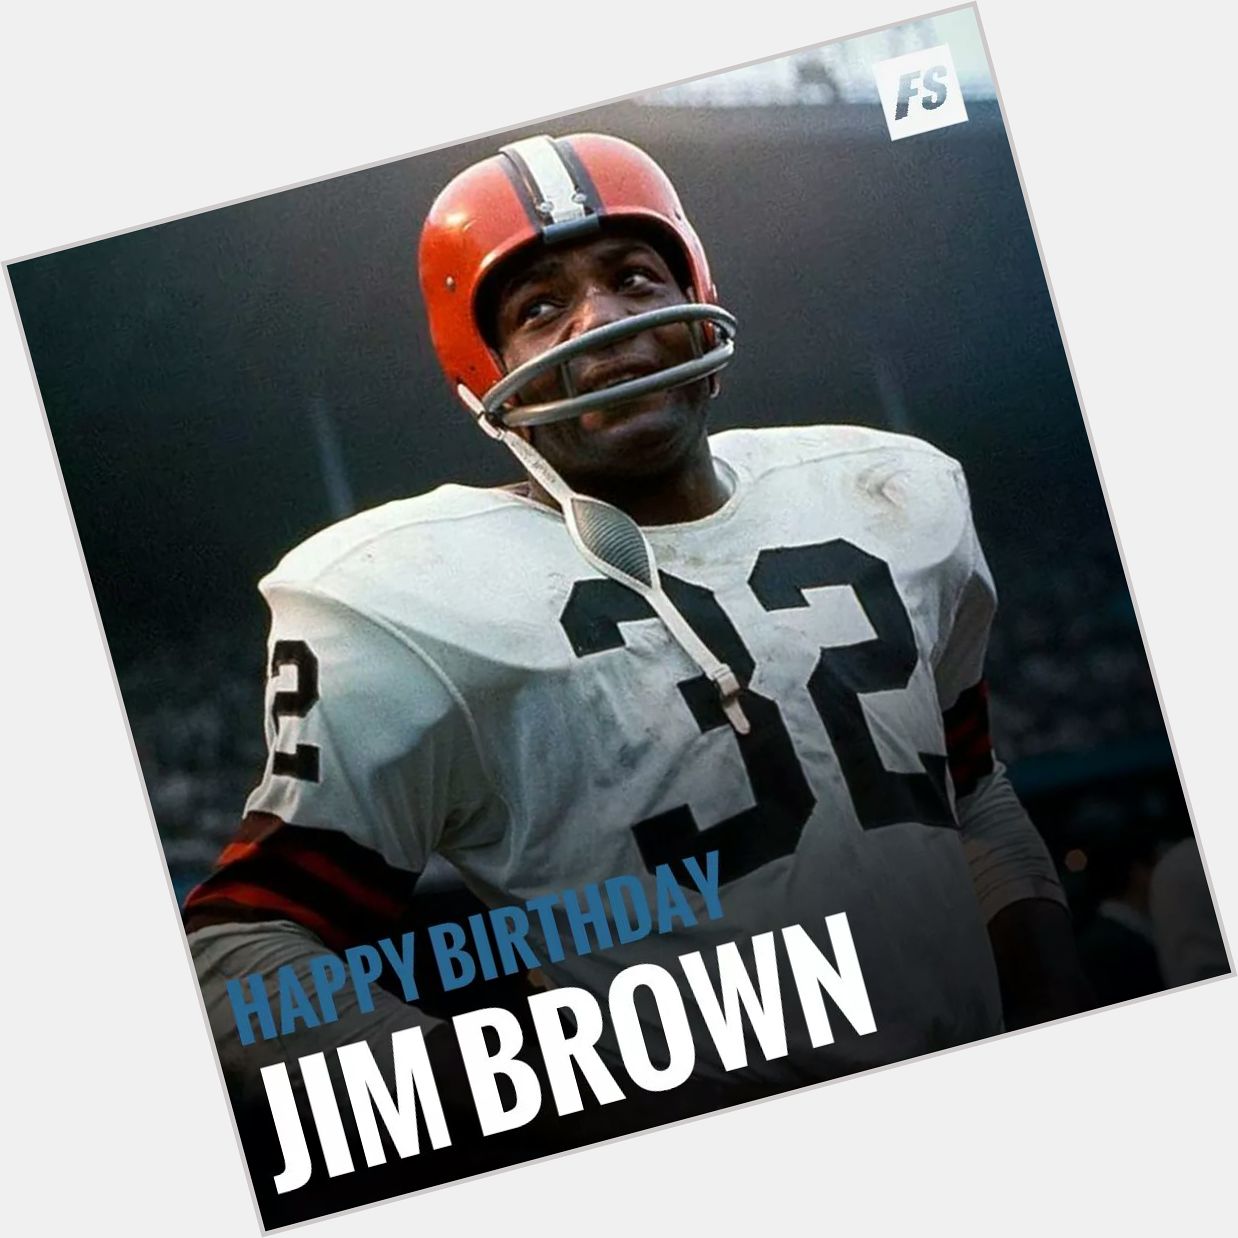 Happy Birthday 82nd Birthday Jim Brown! 